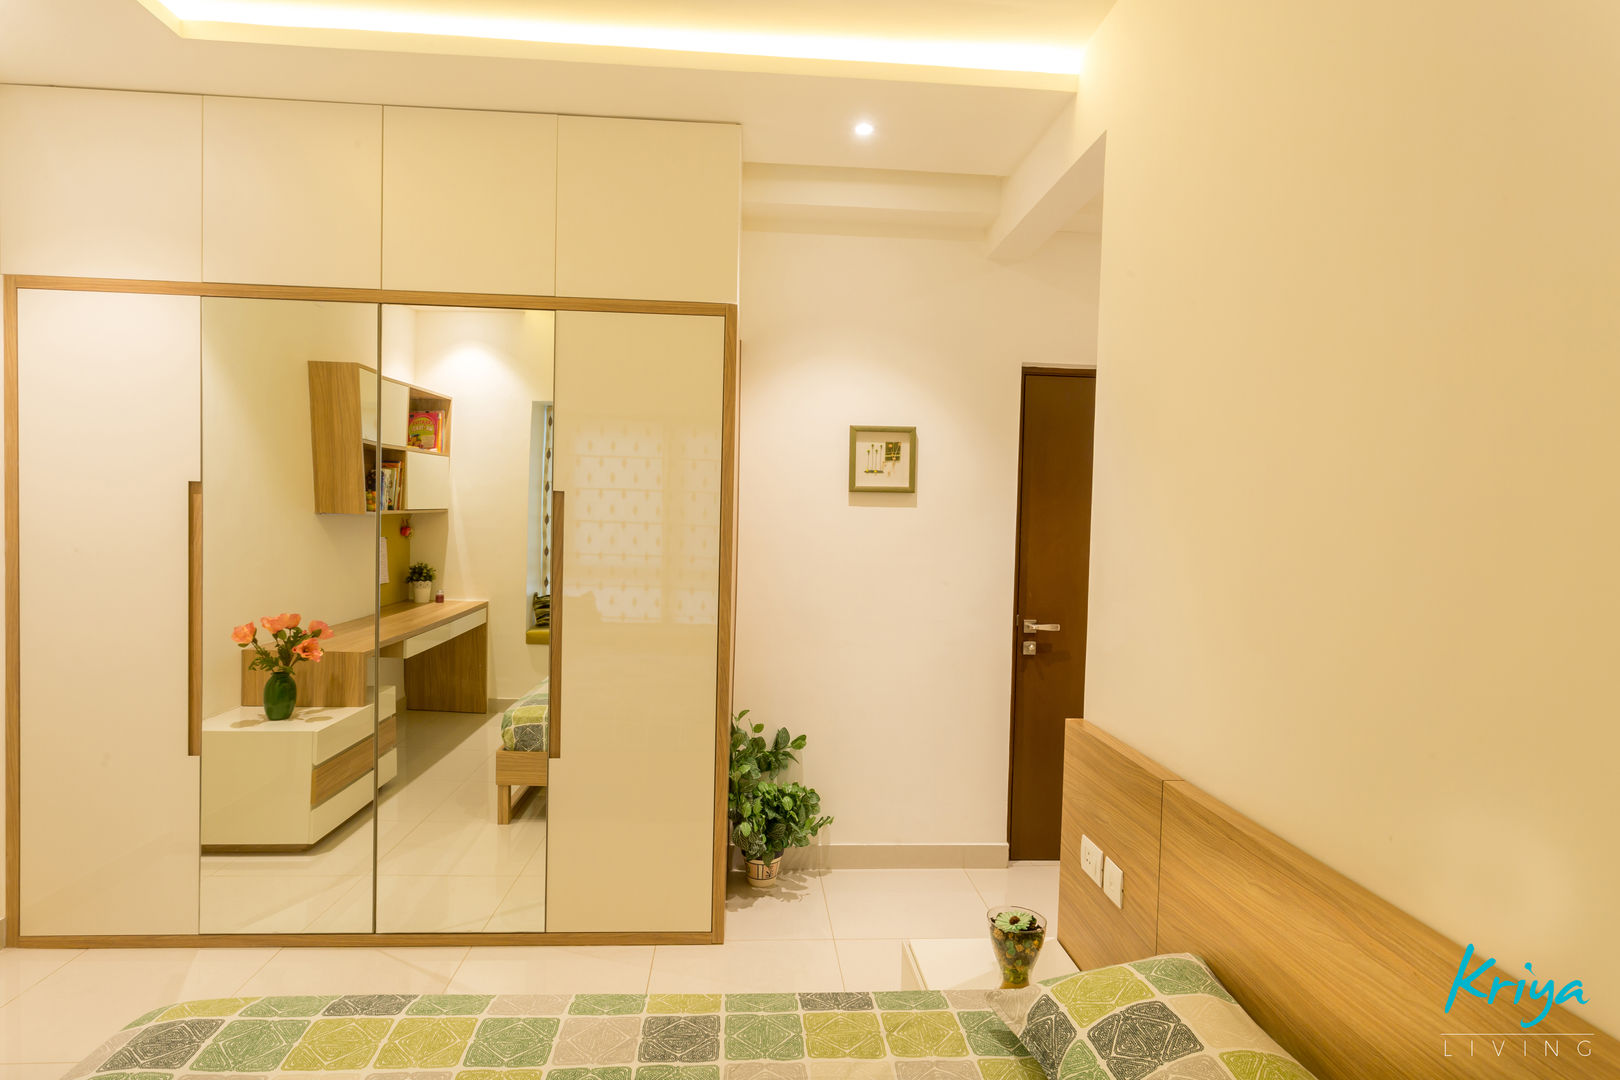 3 BHK apartment - RMZ Galleria, Bengaluru, KRIYA LIVING KRIYA LIVING Спальня в стиле модерн